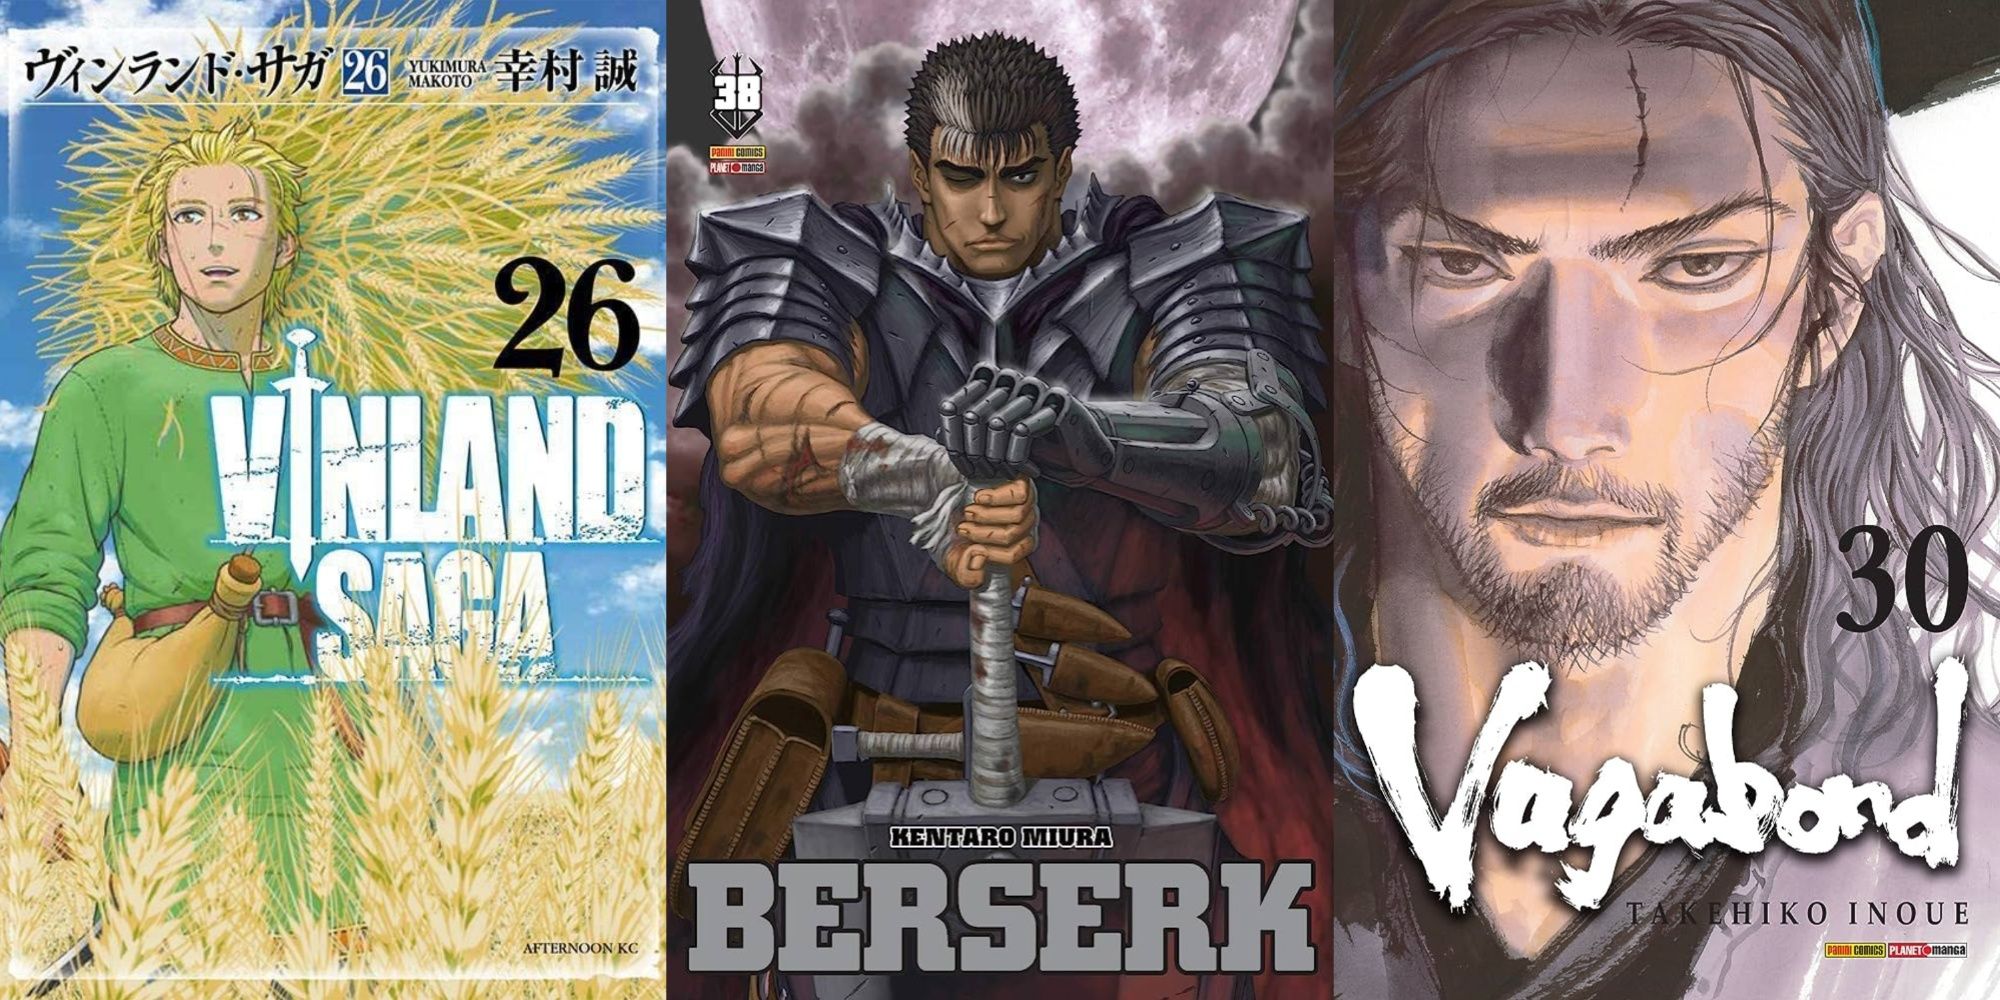 The Best Manga Like Berserk